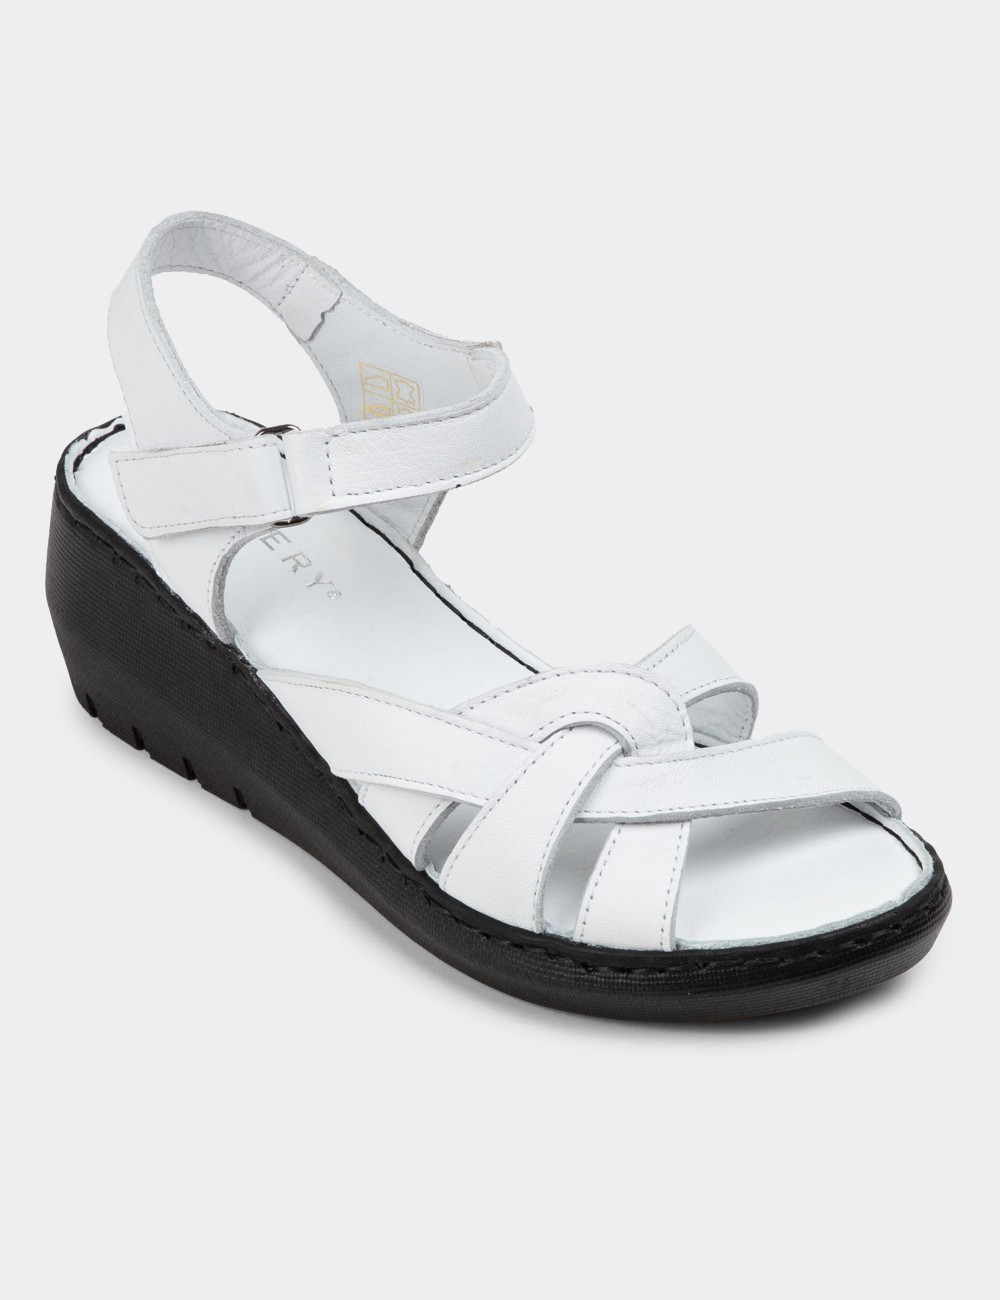 White Leather Sandals - SE141ZBYZC01